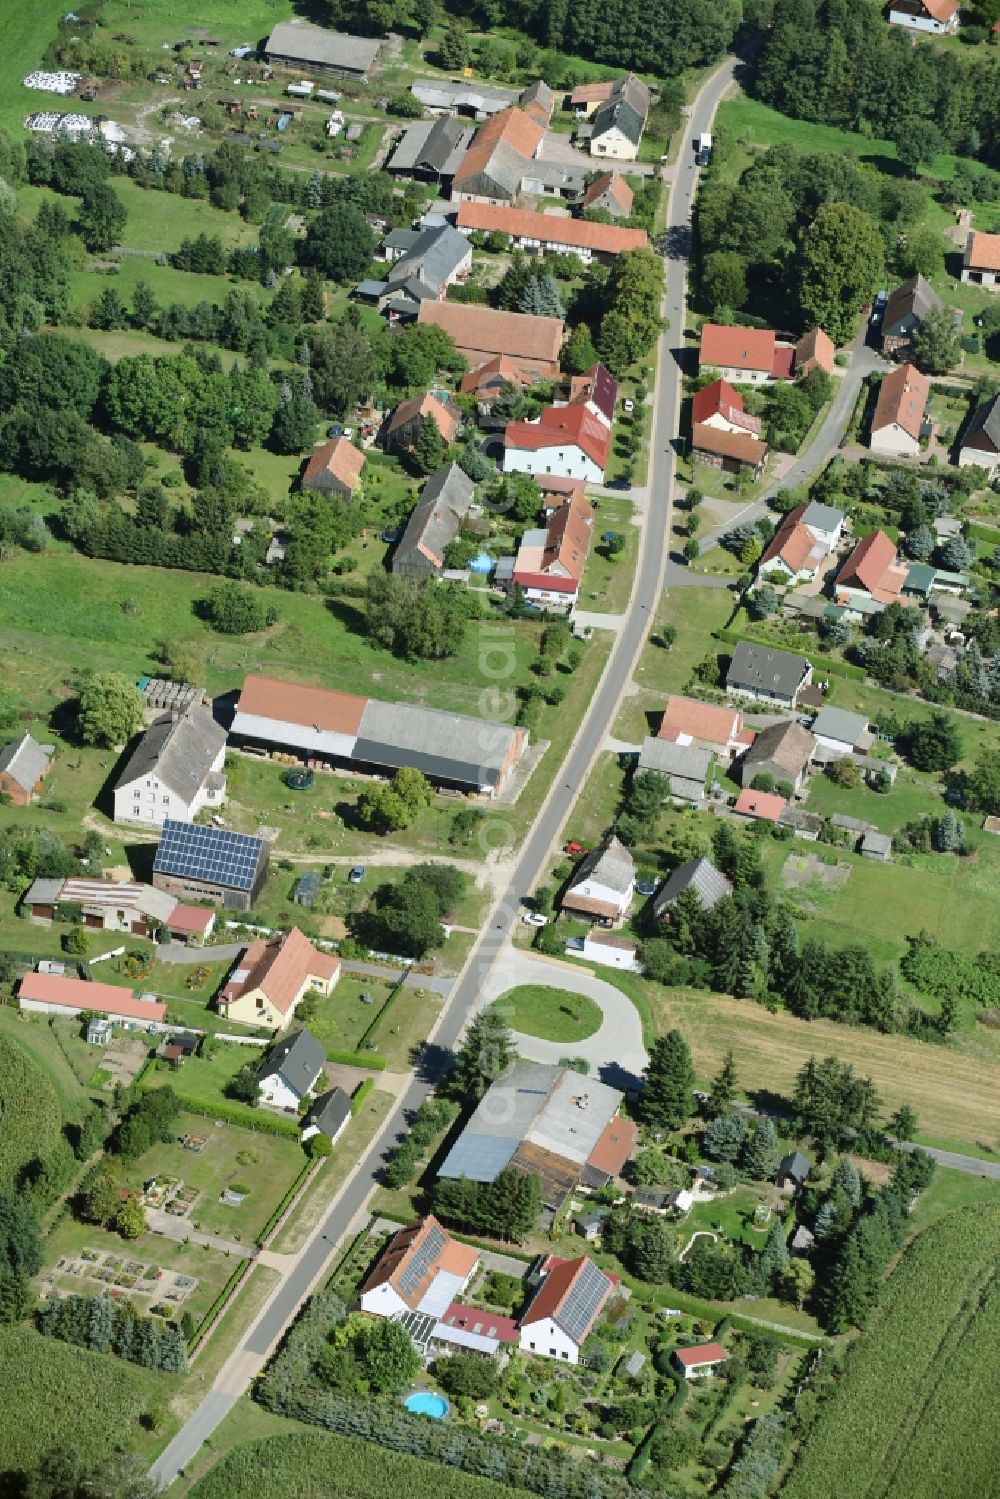 Brüsenhagen from above - View of the village of Bruesenhagen in the state of Brandenburg